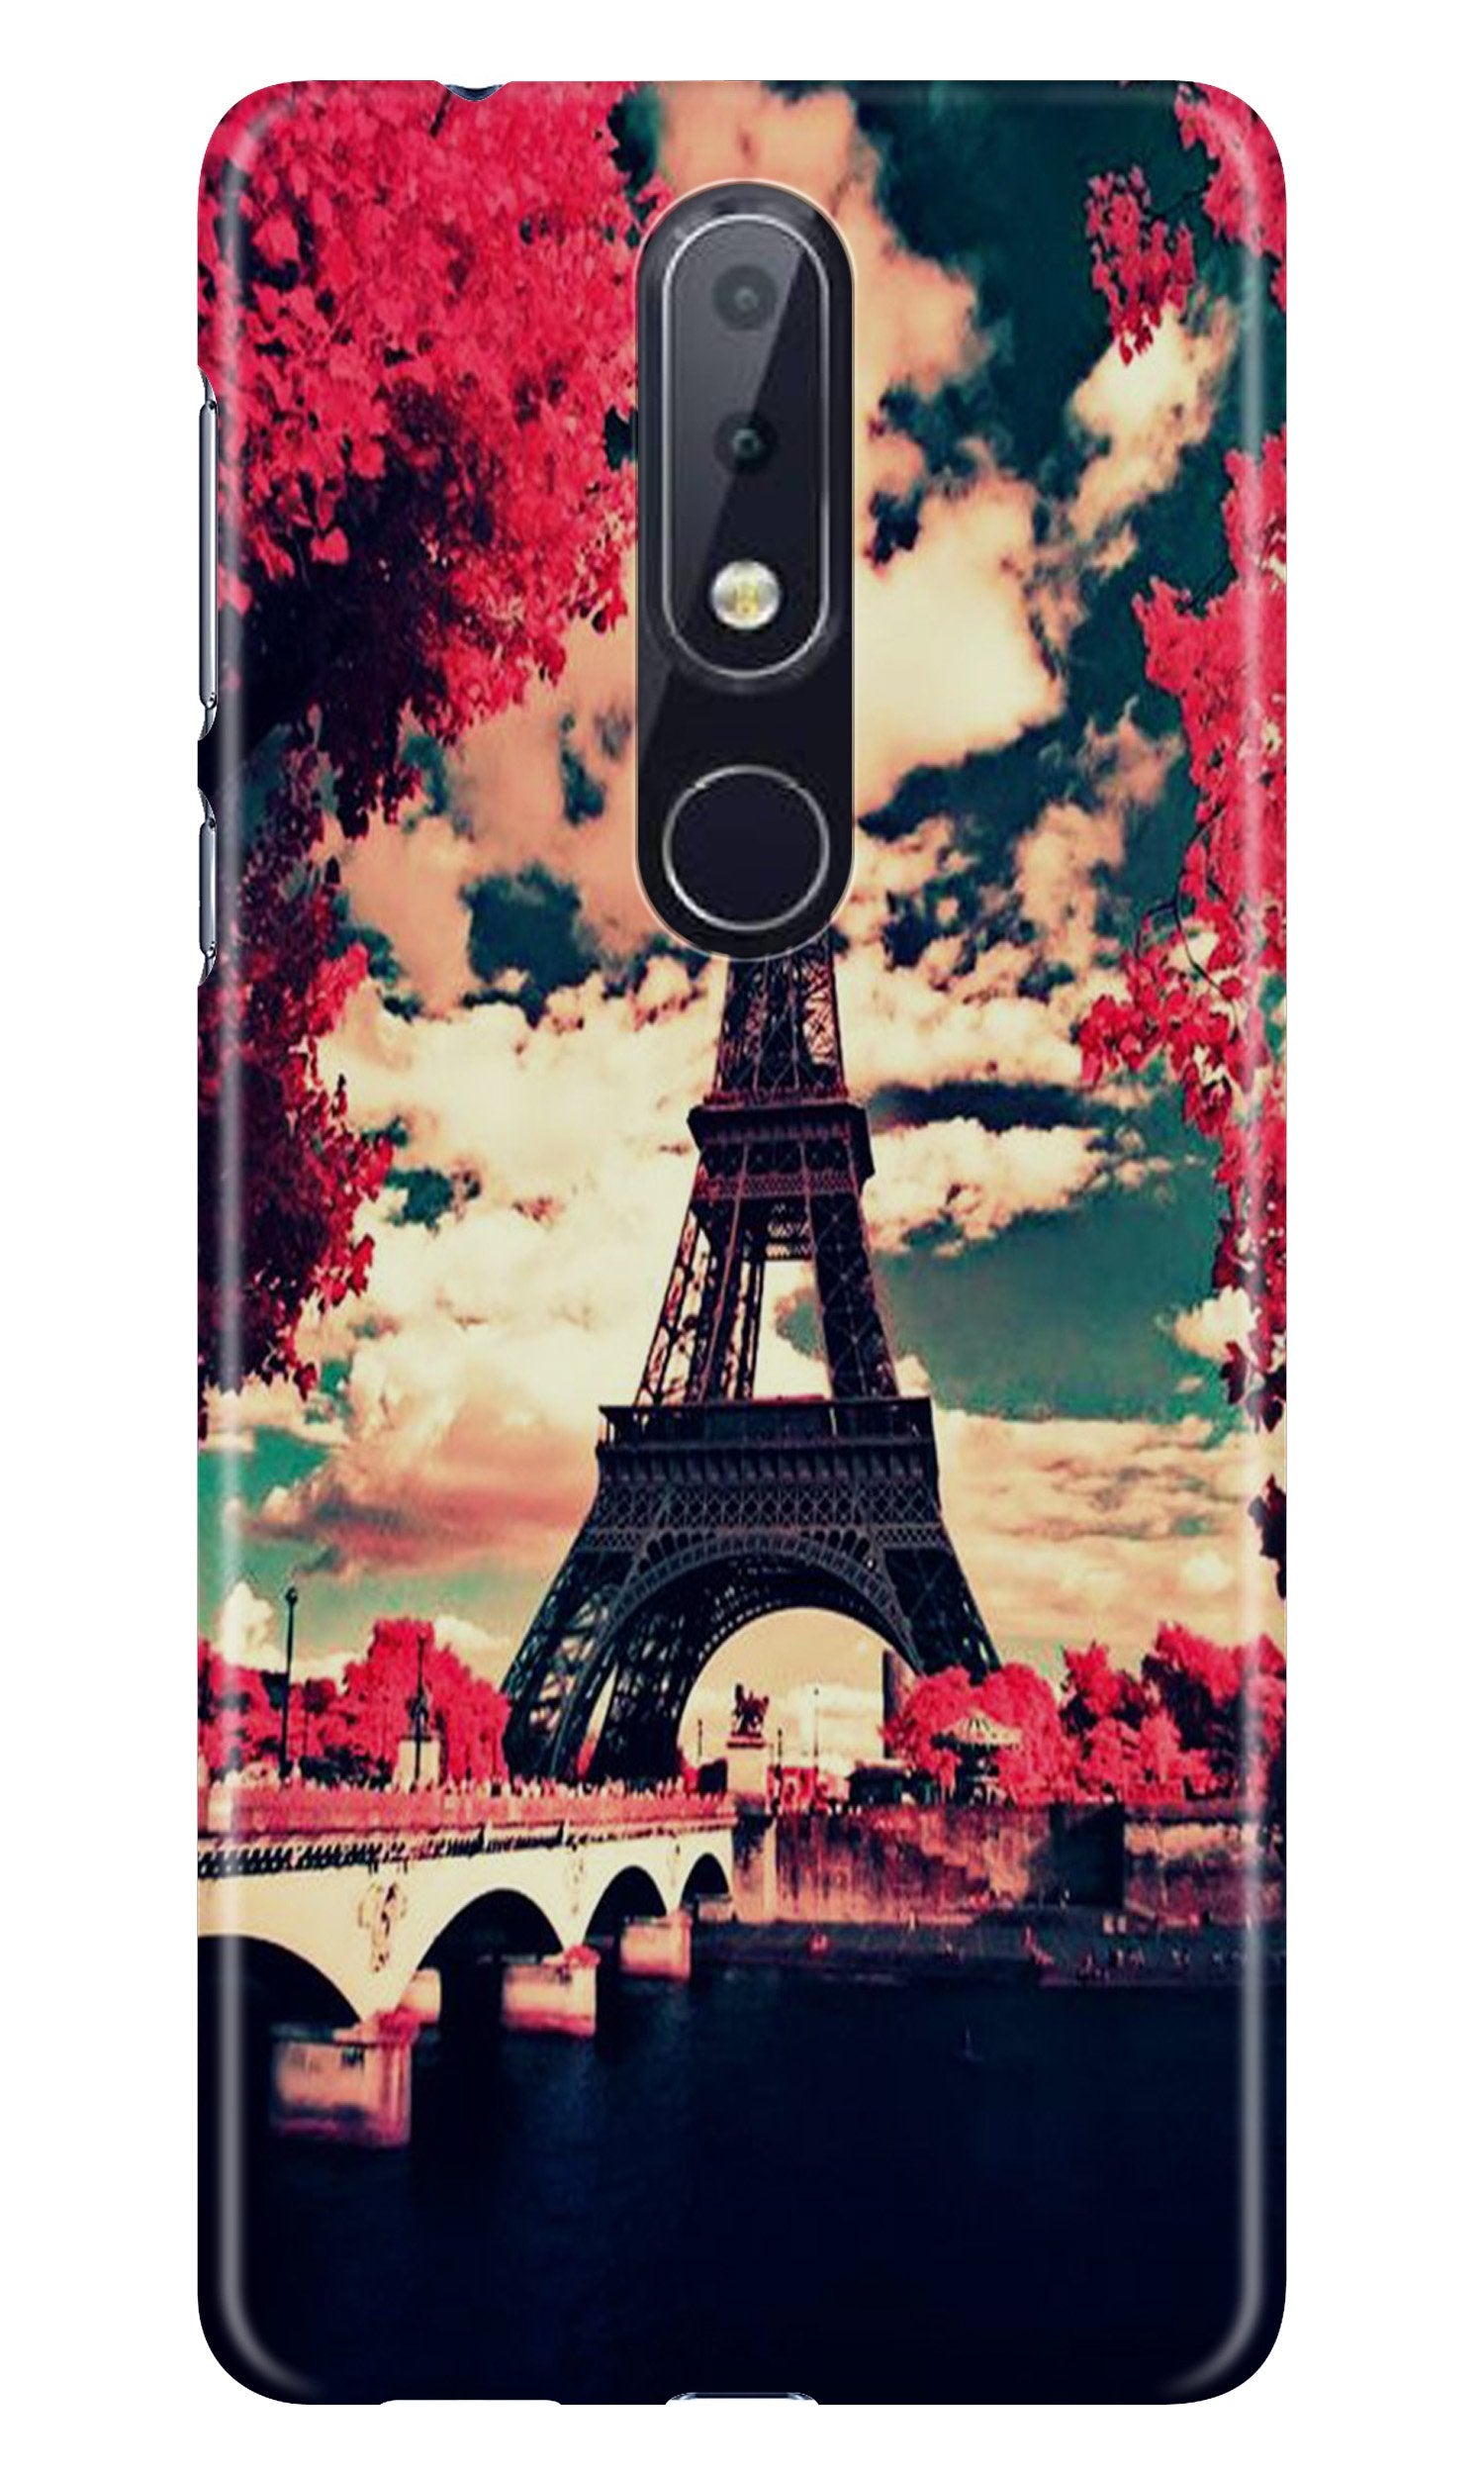 Eiffel Tower Case for Nokia 7.1 (Design No. 212)